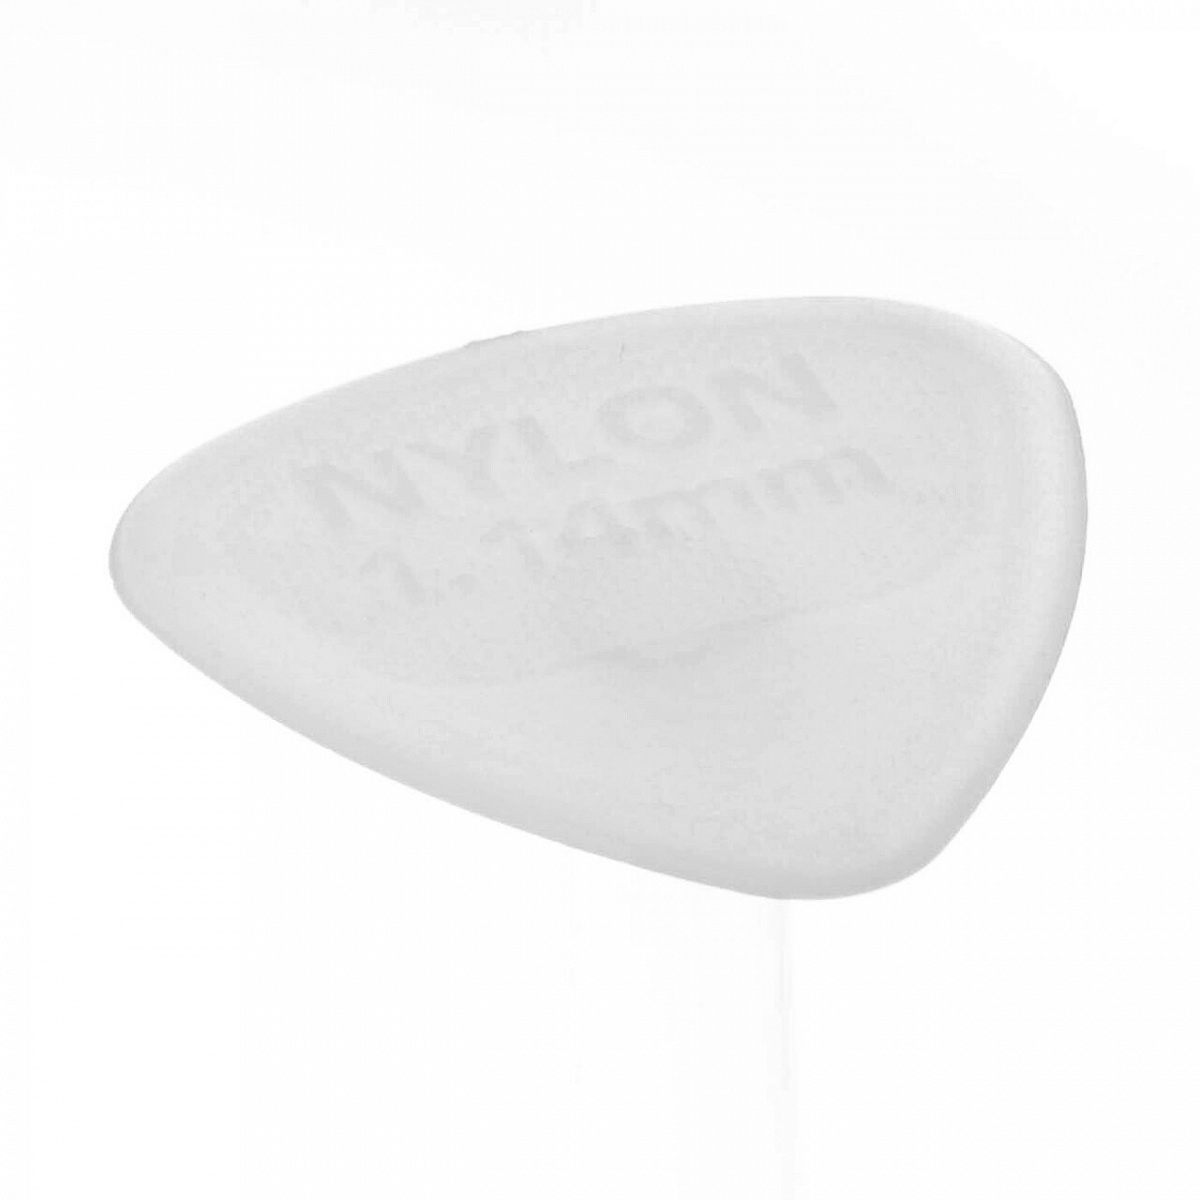 Dunlop Nylon Glow 446R114 72Pack  медиаторы, толщина 1.14 мм, 72 шт.